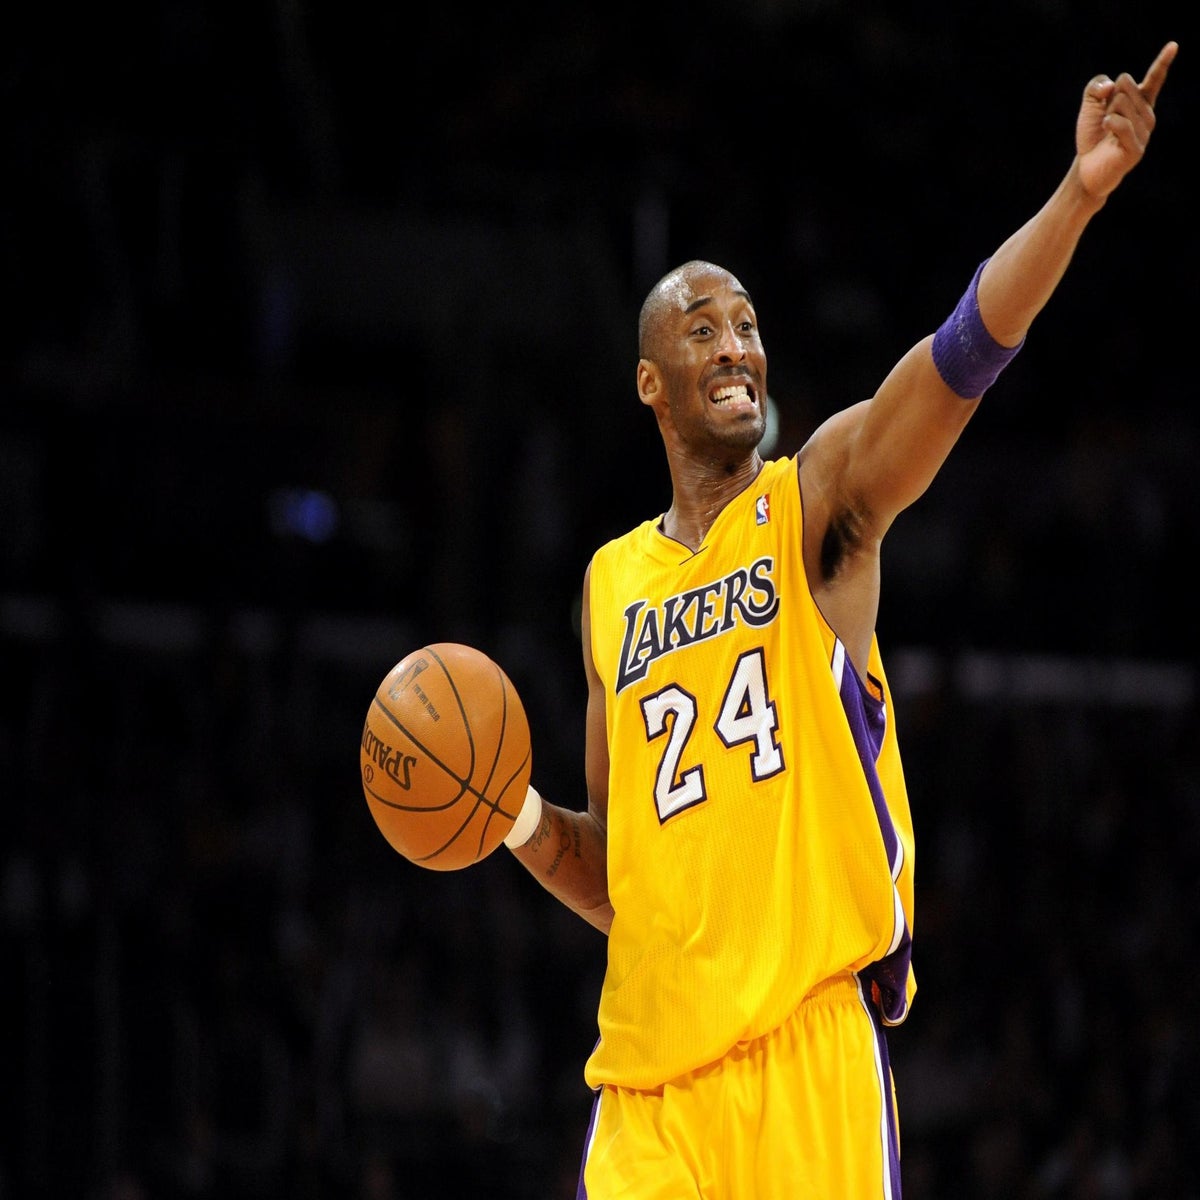 Kobe Bryant killed in helicopter crash aged 41, NBA News